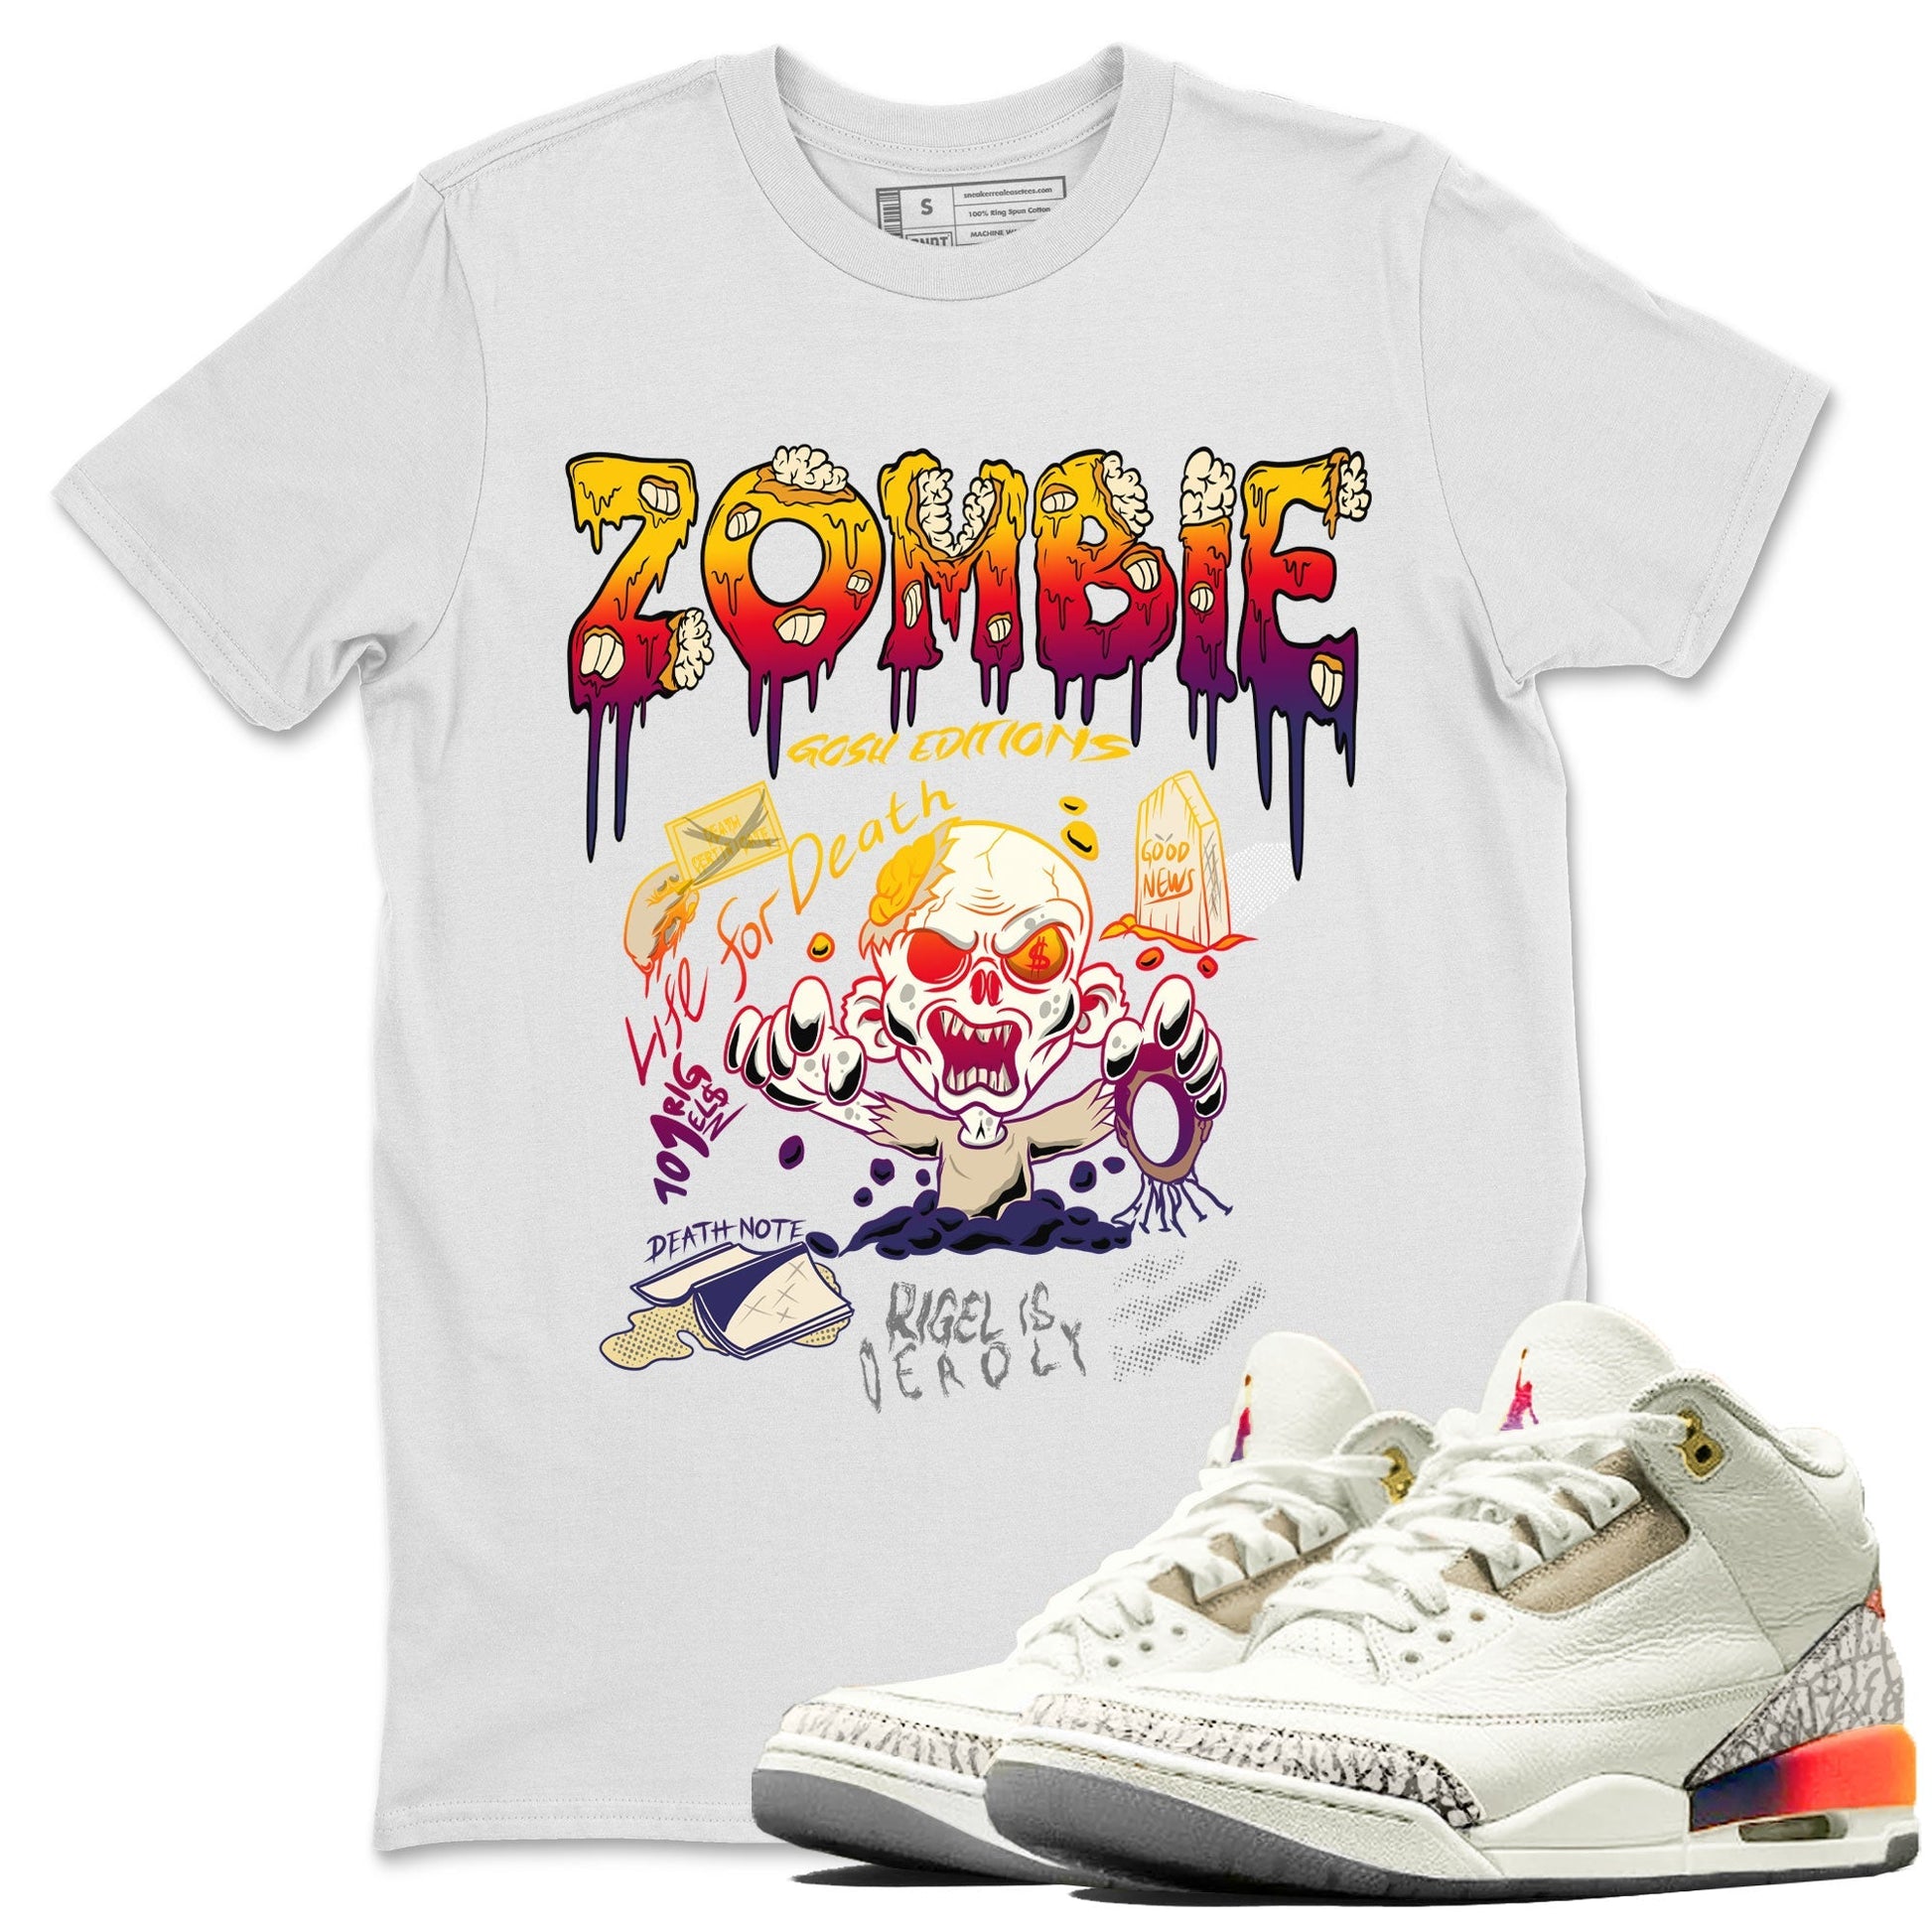 Air Jordan 3 X J Balvin shirt to match jordans Zombie Grave Streetwear Sneaker Shirt Air Jordan 3 X J Balvin Drip Gear Zone Sneaker Matching Clothing LGBT Pride T-Shirt Unisex White 1 T-Shirt